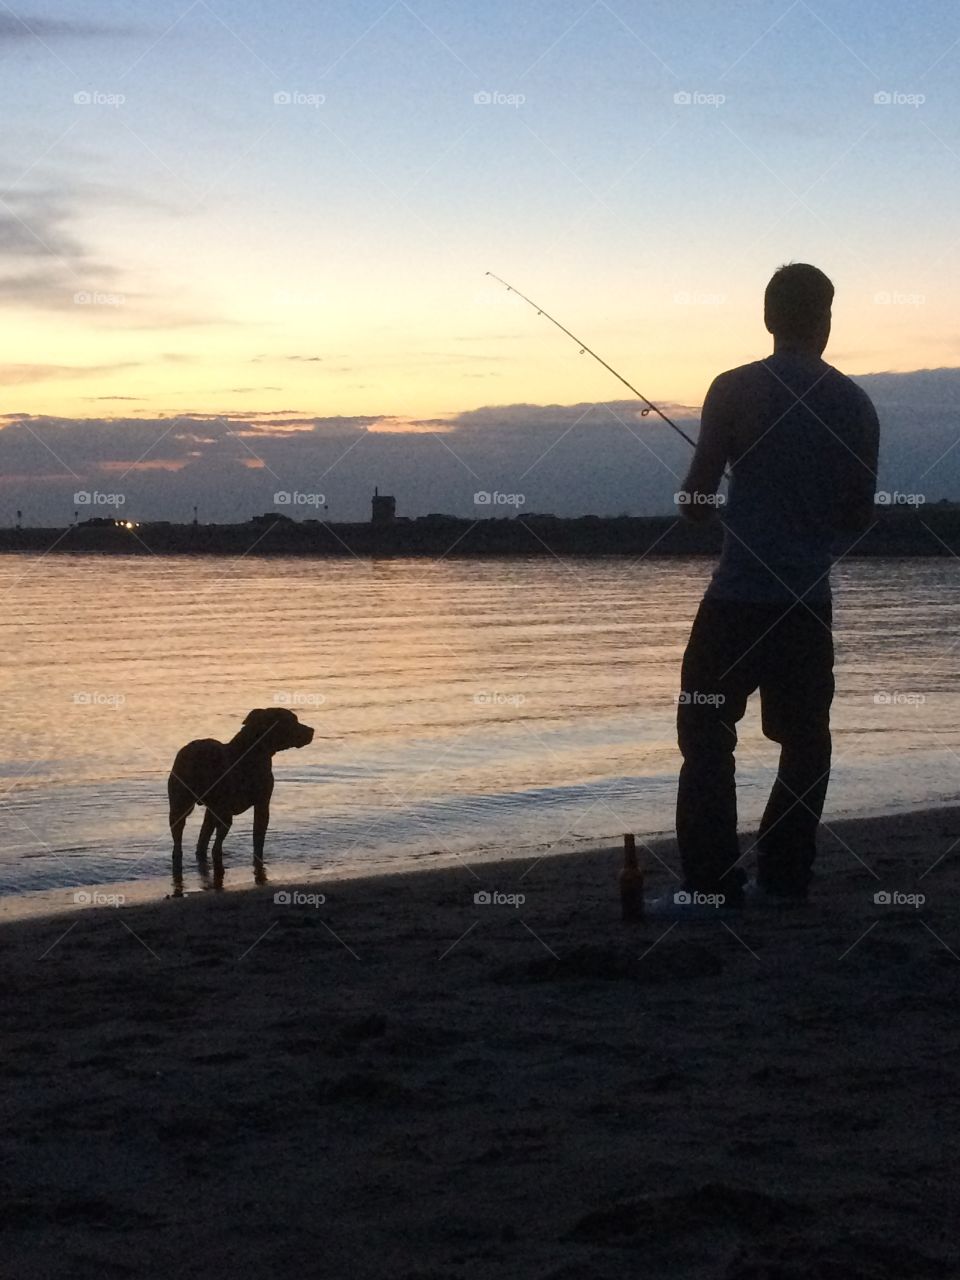 Fishing buddies